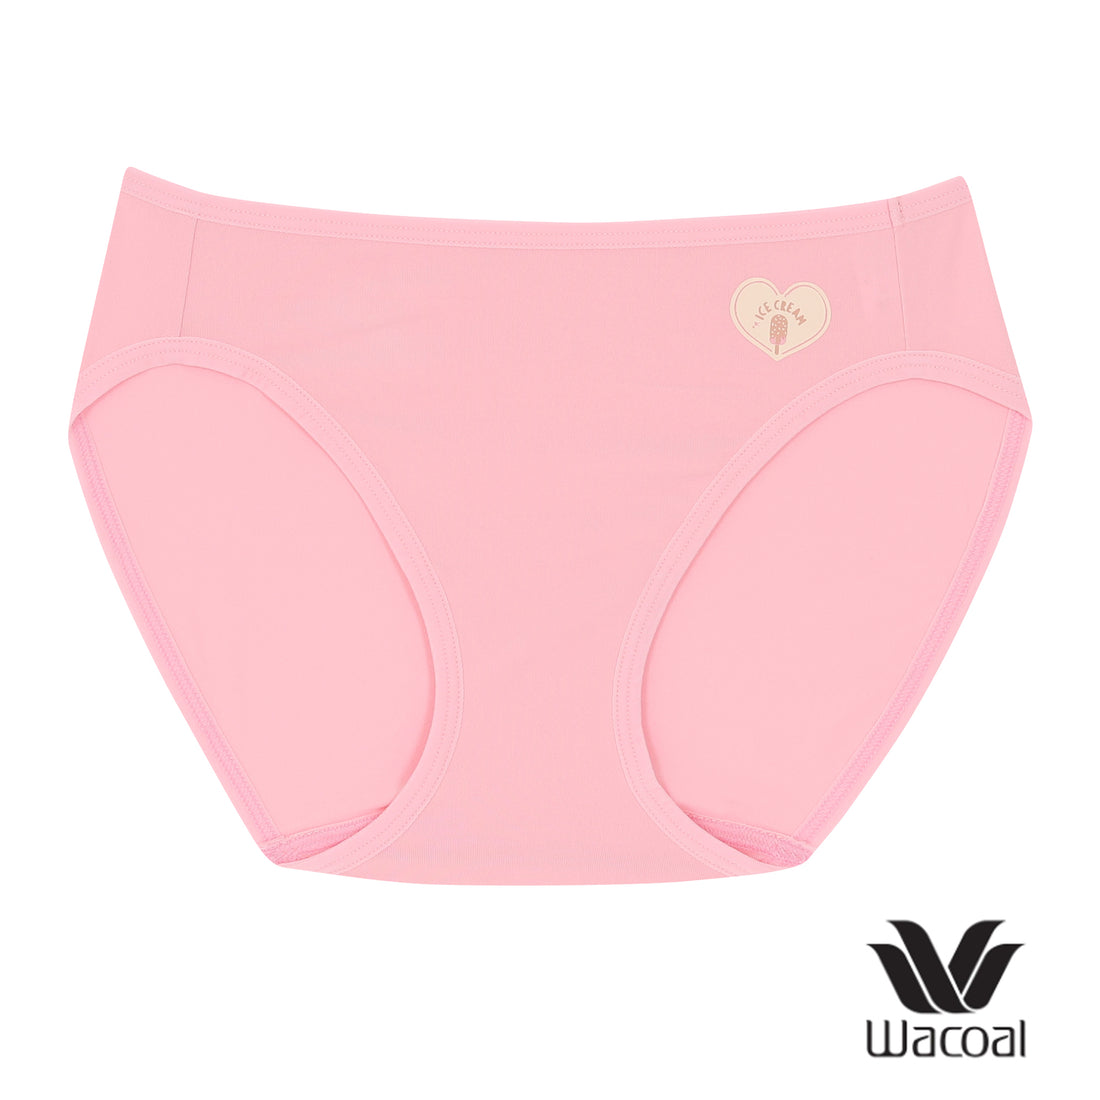 Wacoal Panty, bikini style underwear, model WU2C04, pink (OR)